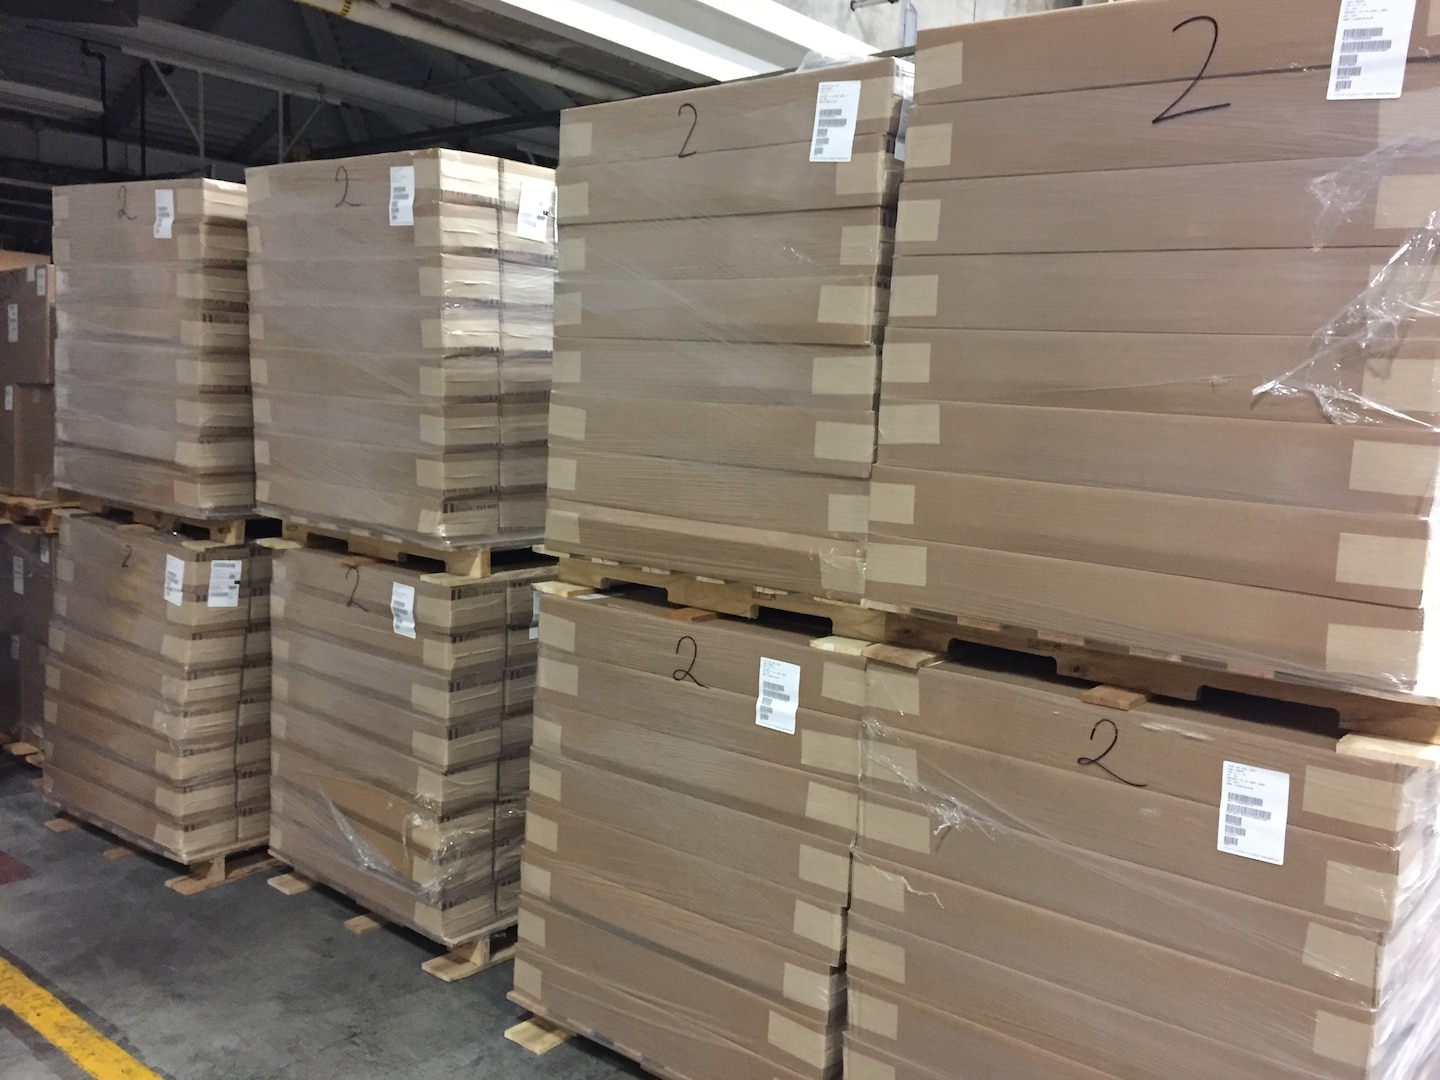 Cots await shipment at DLA Distribution Susquehanna, Pennsylvania.